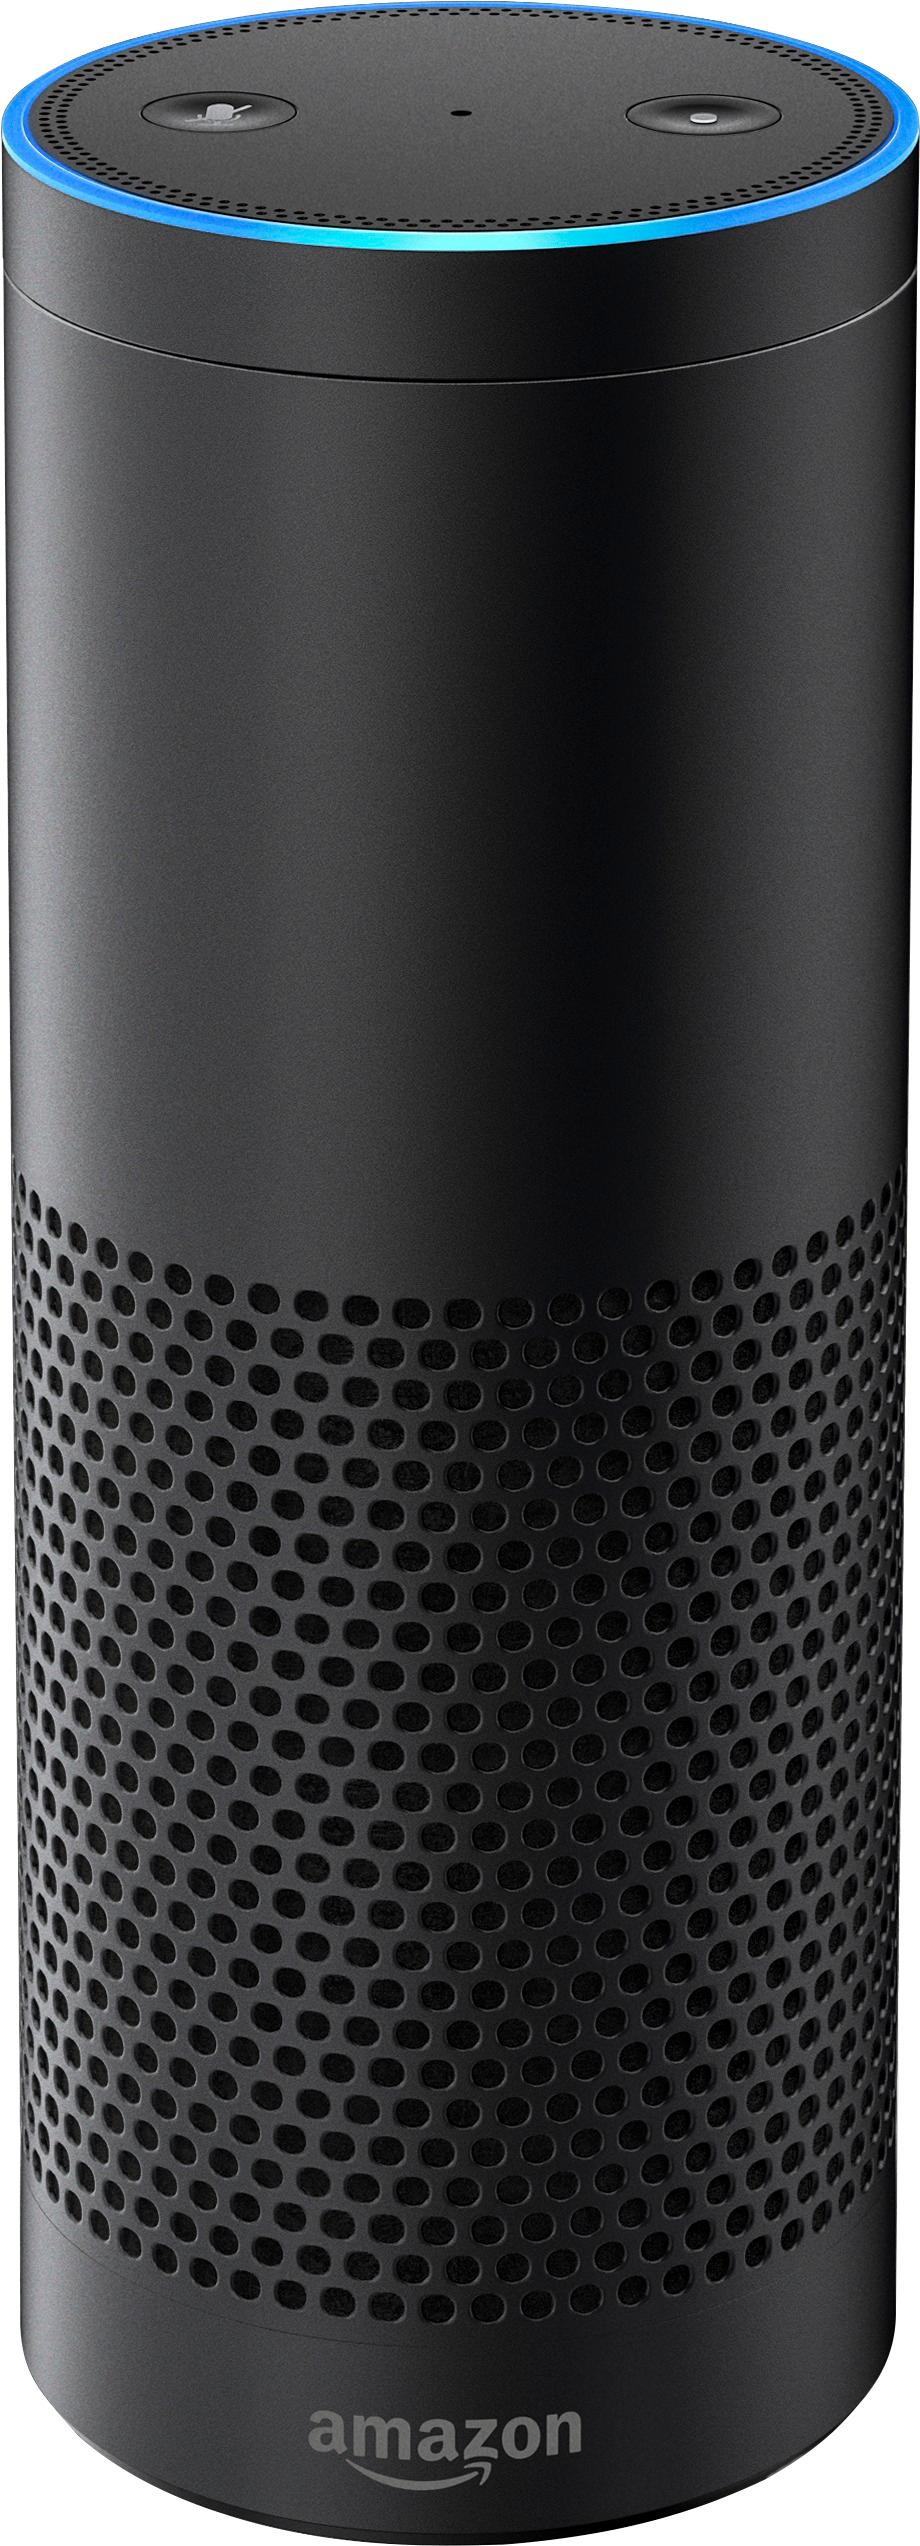 Best Buy: Amazon Echo Plus (1st Generation) Smart Speaker with 